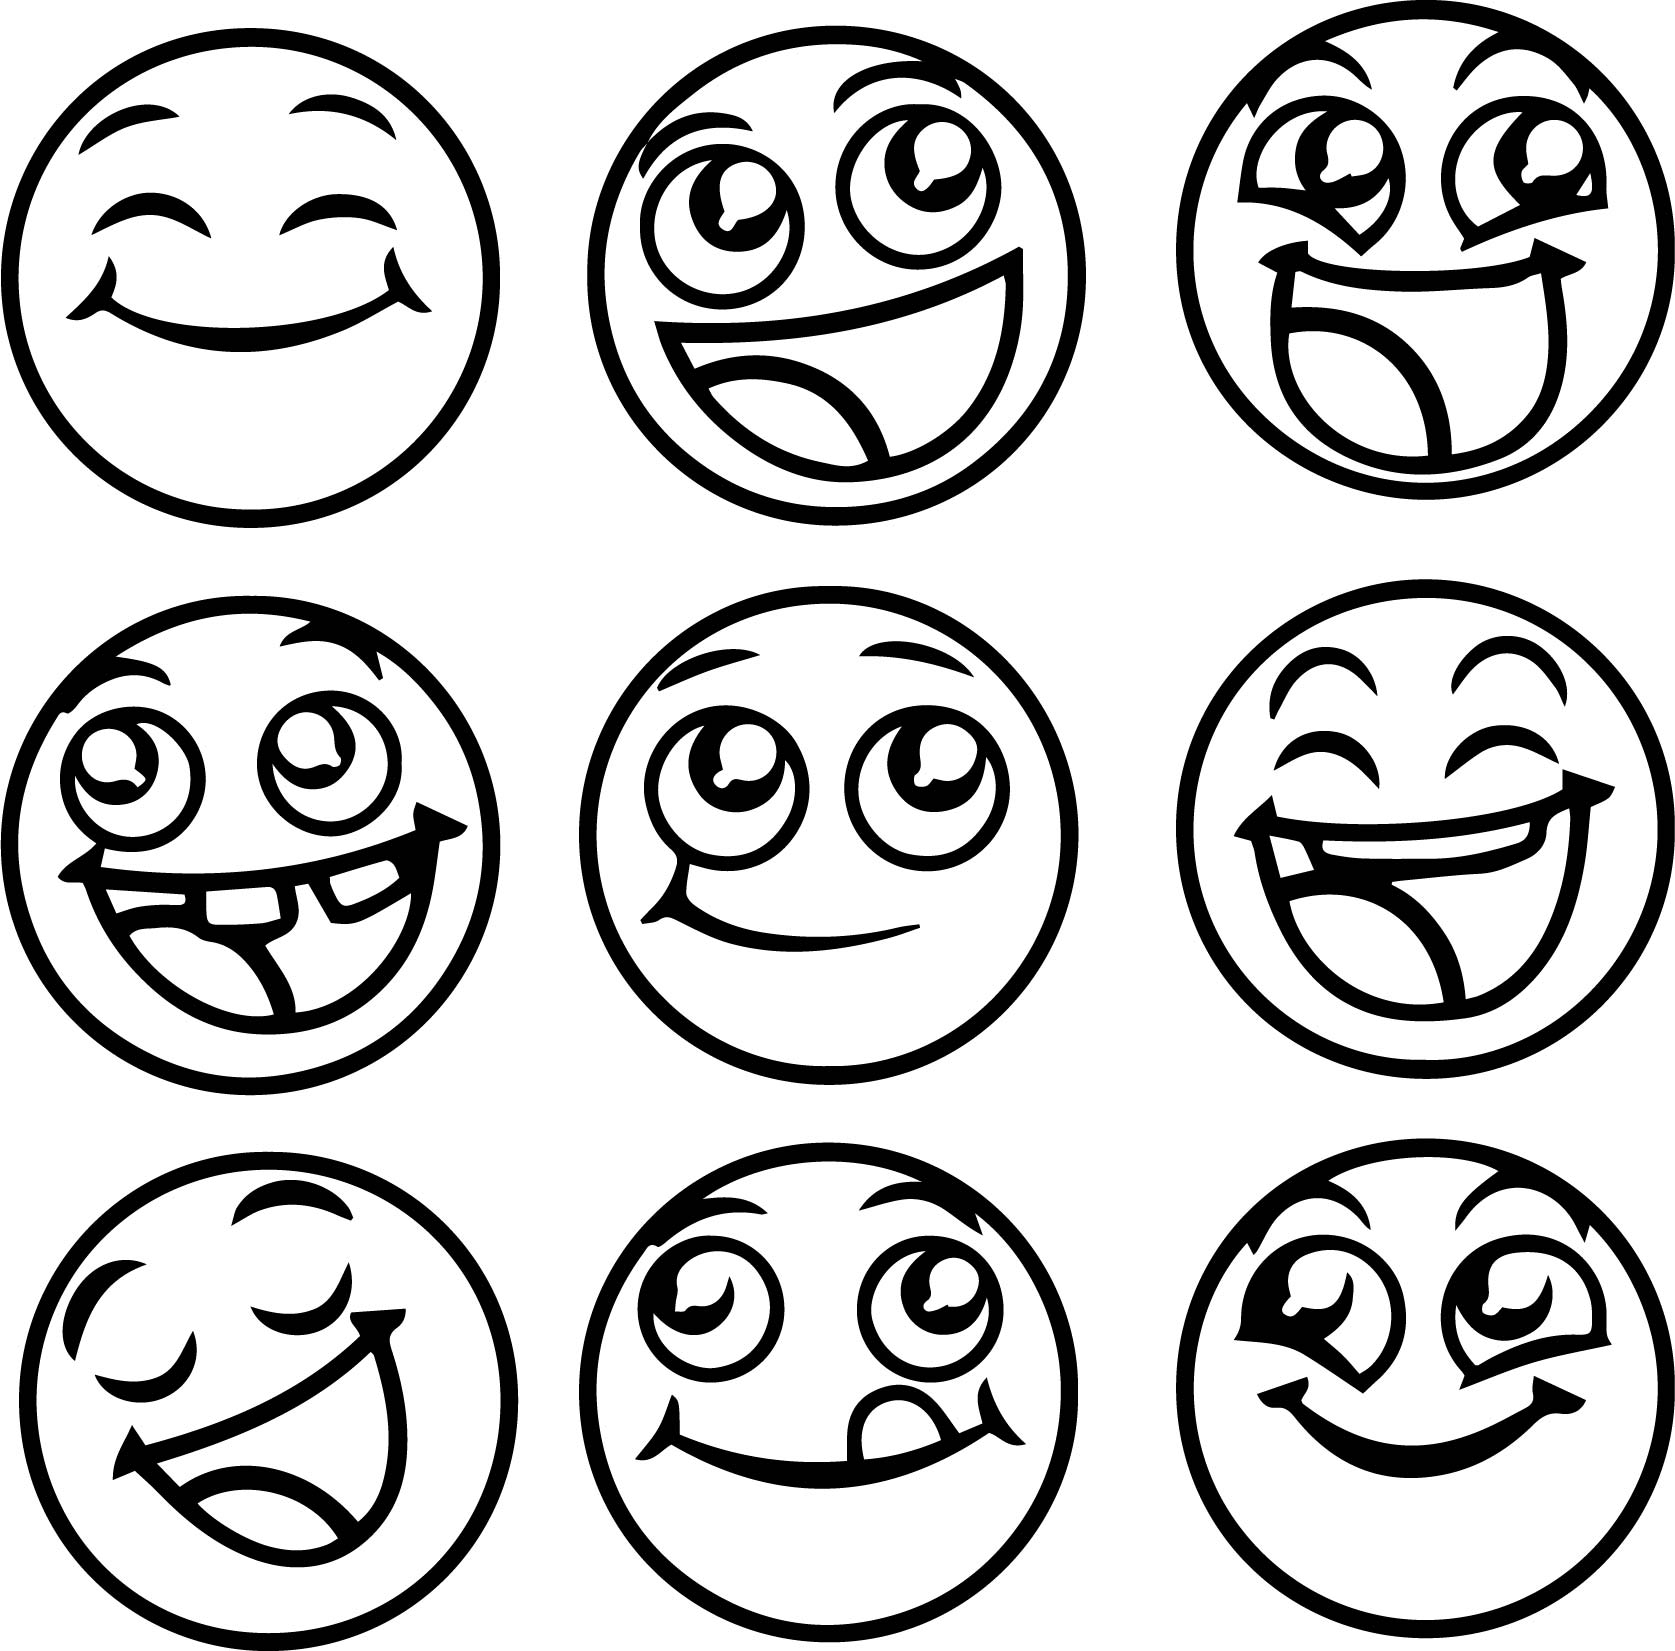 Happy Emoticons All Coloring Page – Wecoloringpage.com